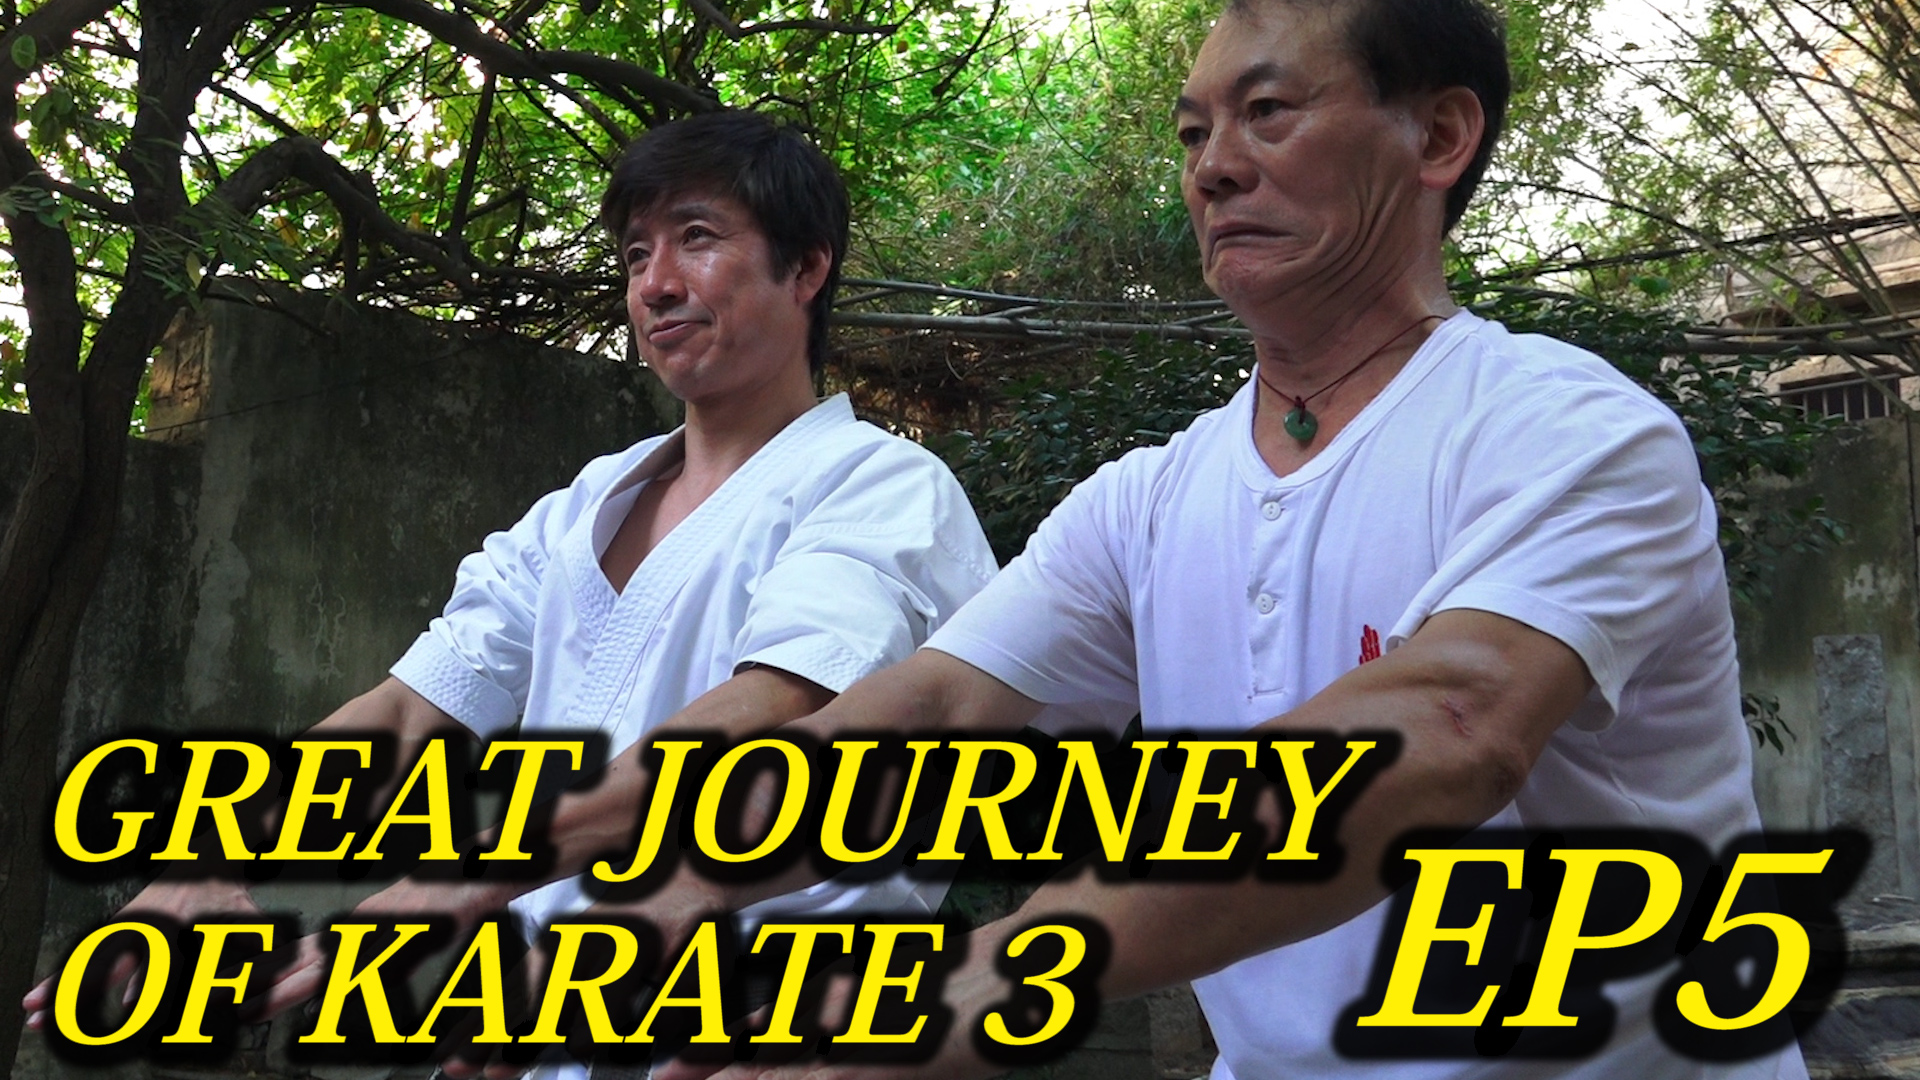 GREAT JOURNEY OF KARATE 3 - Kuro-Obi World